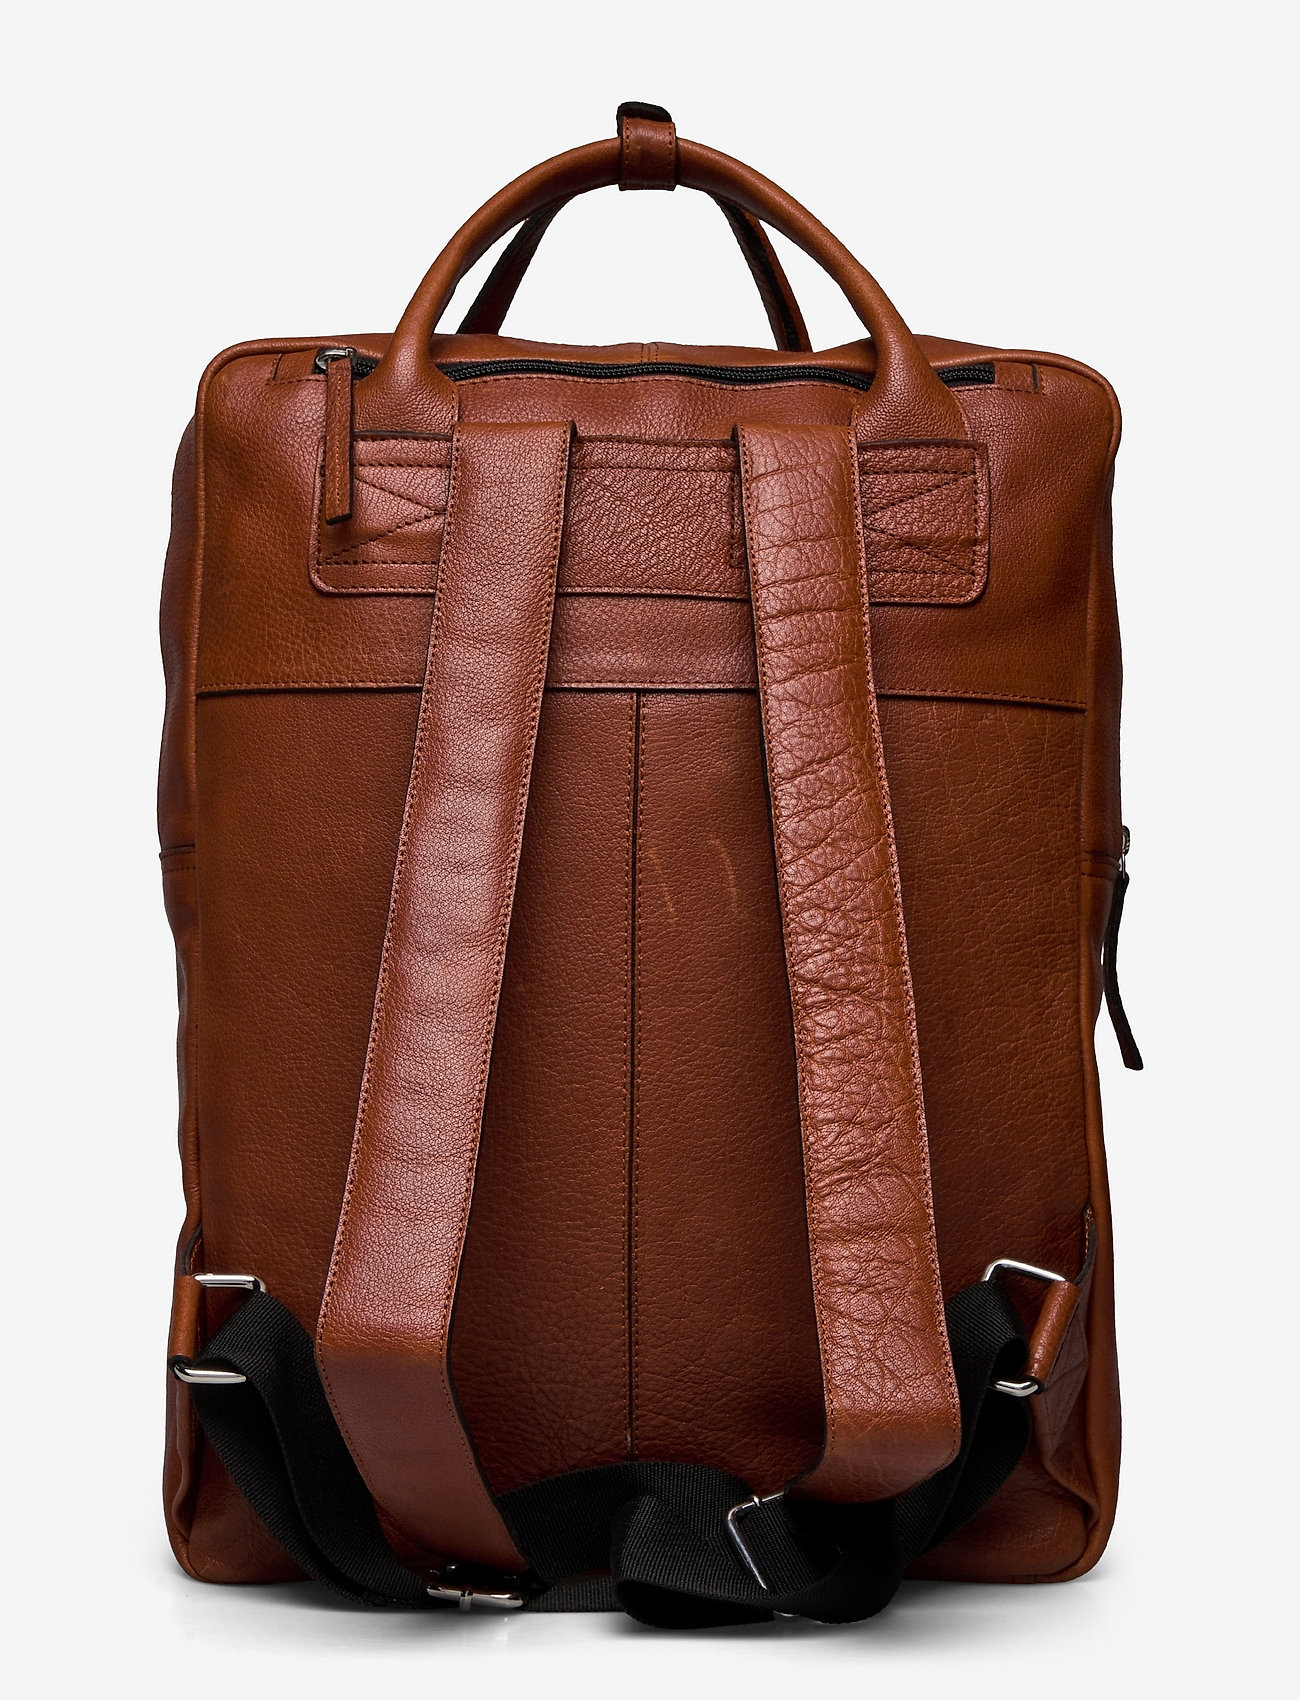 Still Nordic - stillRichard Backpack - backpacks - brandy - 1